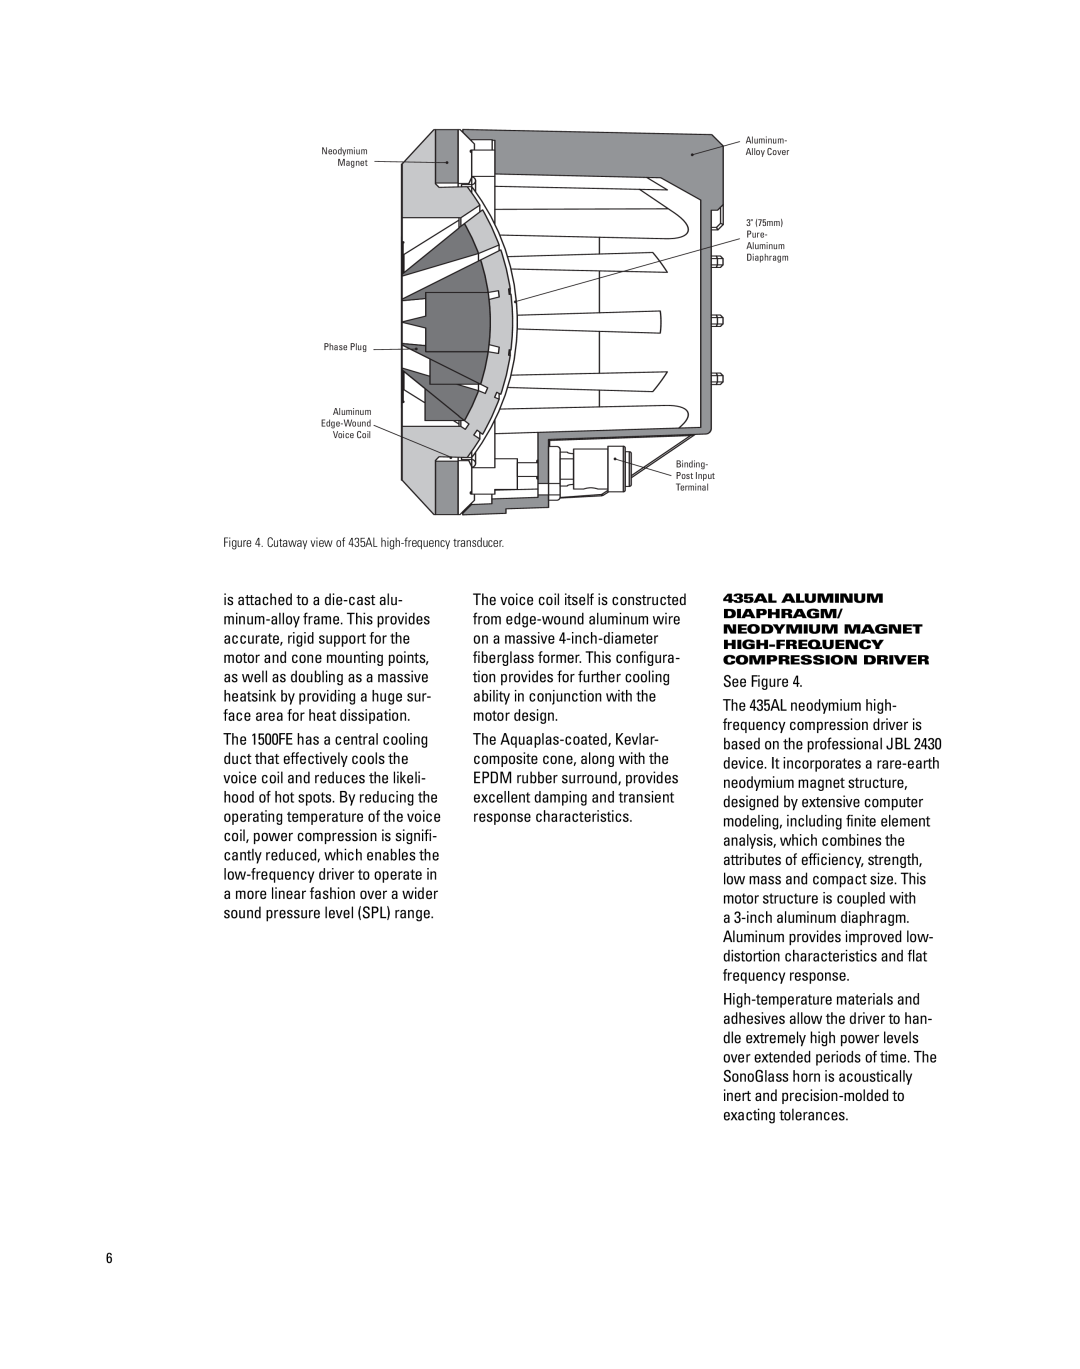 JBL S4800 manual See Figure, Neodymium Magnet Phase Plug Aluminum Edge-Wound, Voice Coil, Aluminum Alloy Cover 